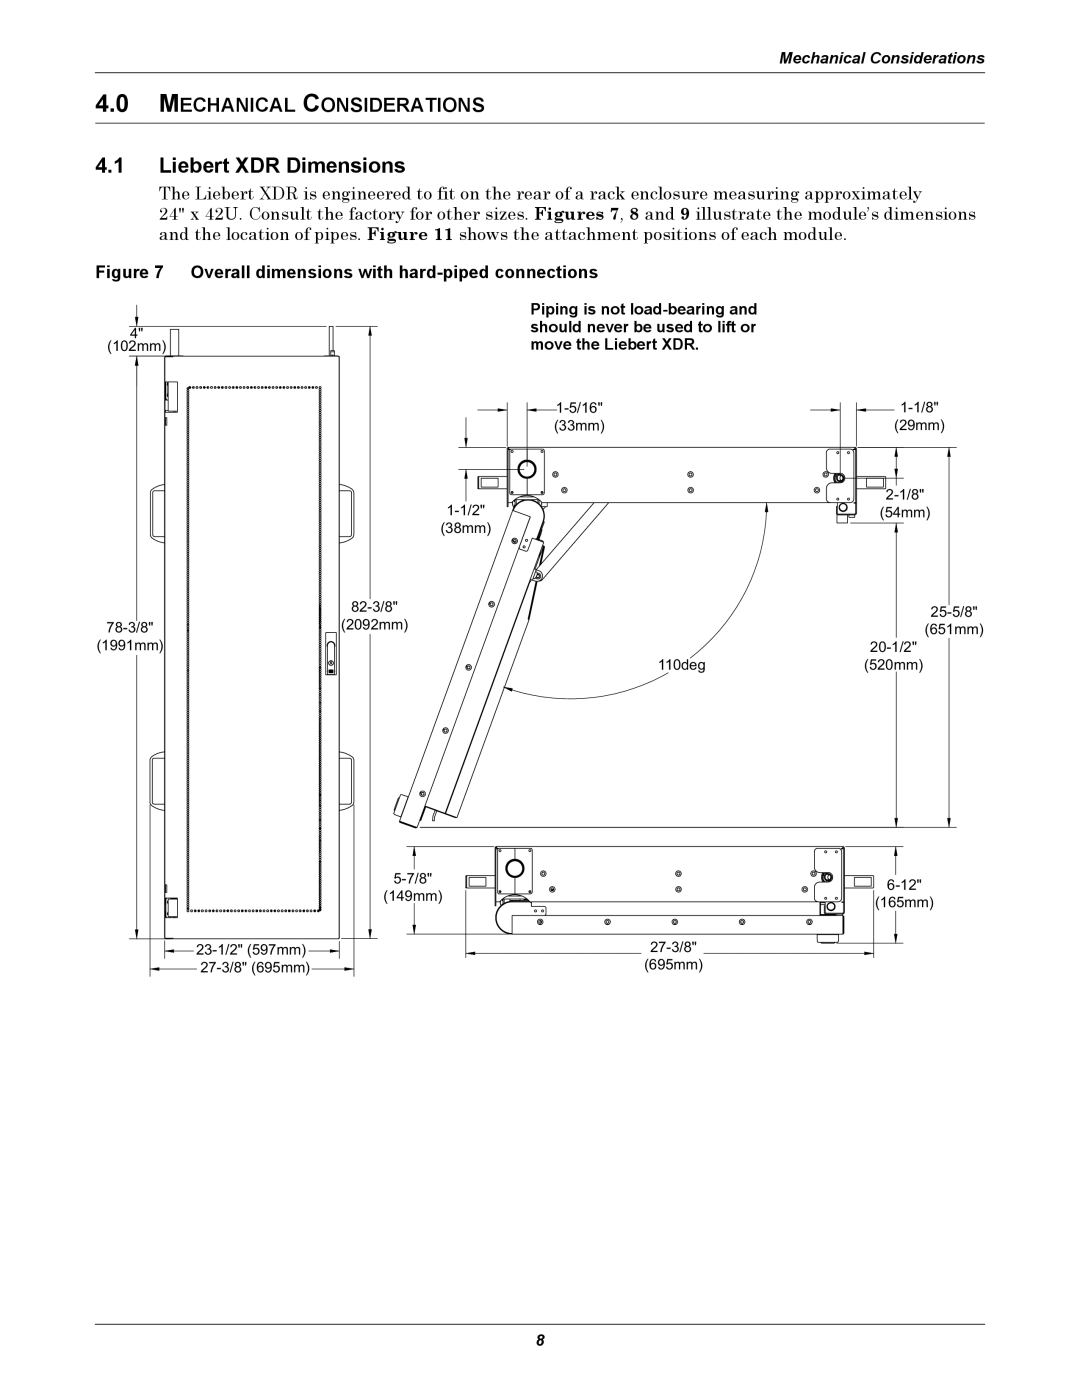 Emerson user manual 4.1Liebert XDR Dimensions, 4.0MECHANICAL CONSIDERATIONS 